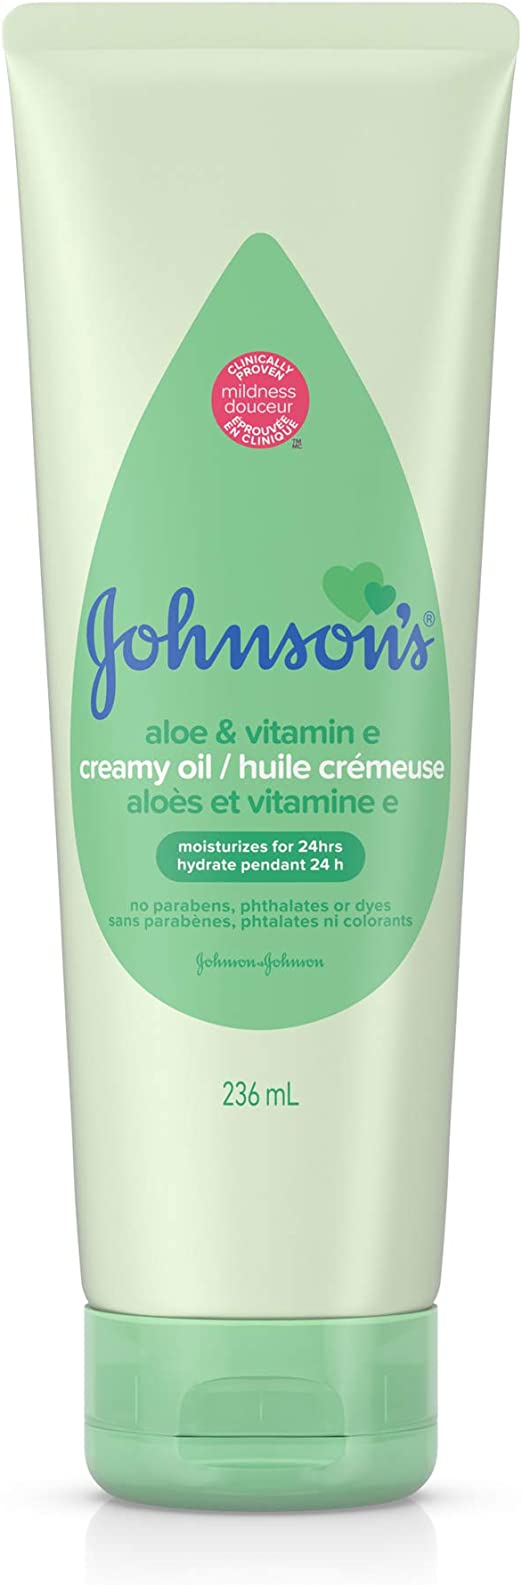 Johnson’s Baby Creamy Oil with Aloe Vera & Vitamin E, Moisturizing Body Lotion, Paraben Free, 236 mL